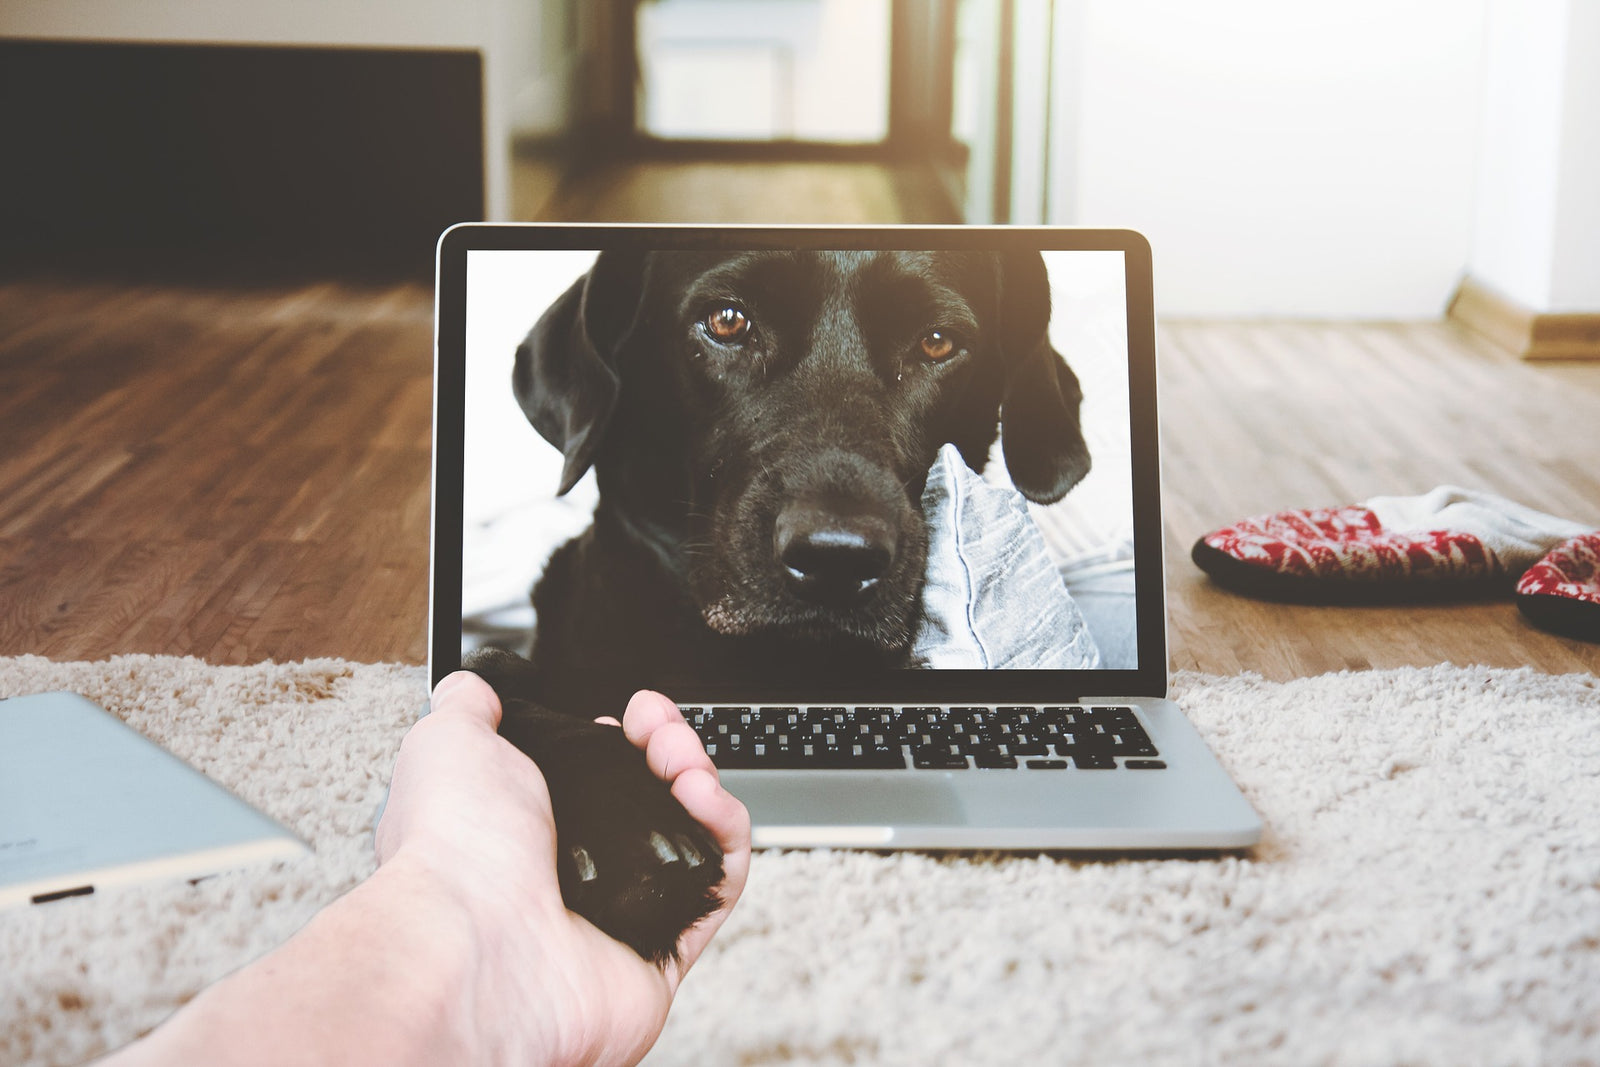 Doglingo: A Guide to Dog Internet Jargon